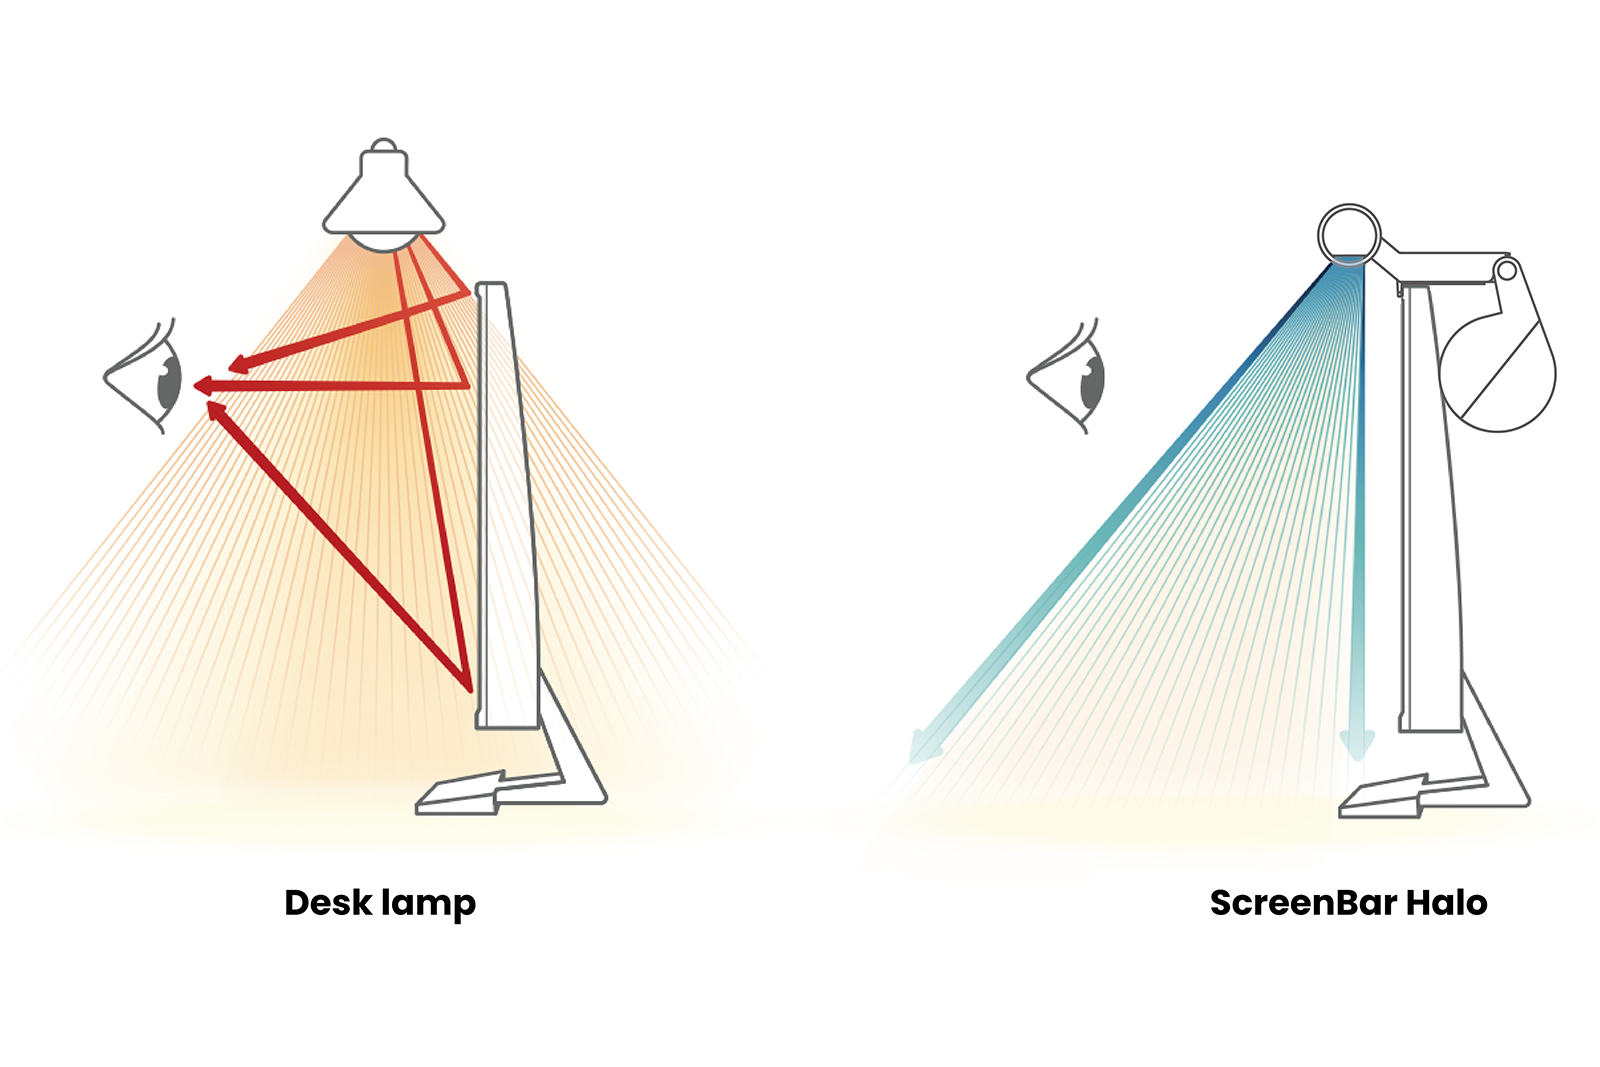 A comparison of BenQ's ScreenBar Halo monitor light bar and a task lamp